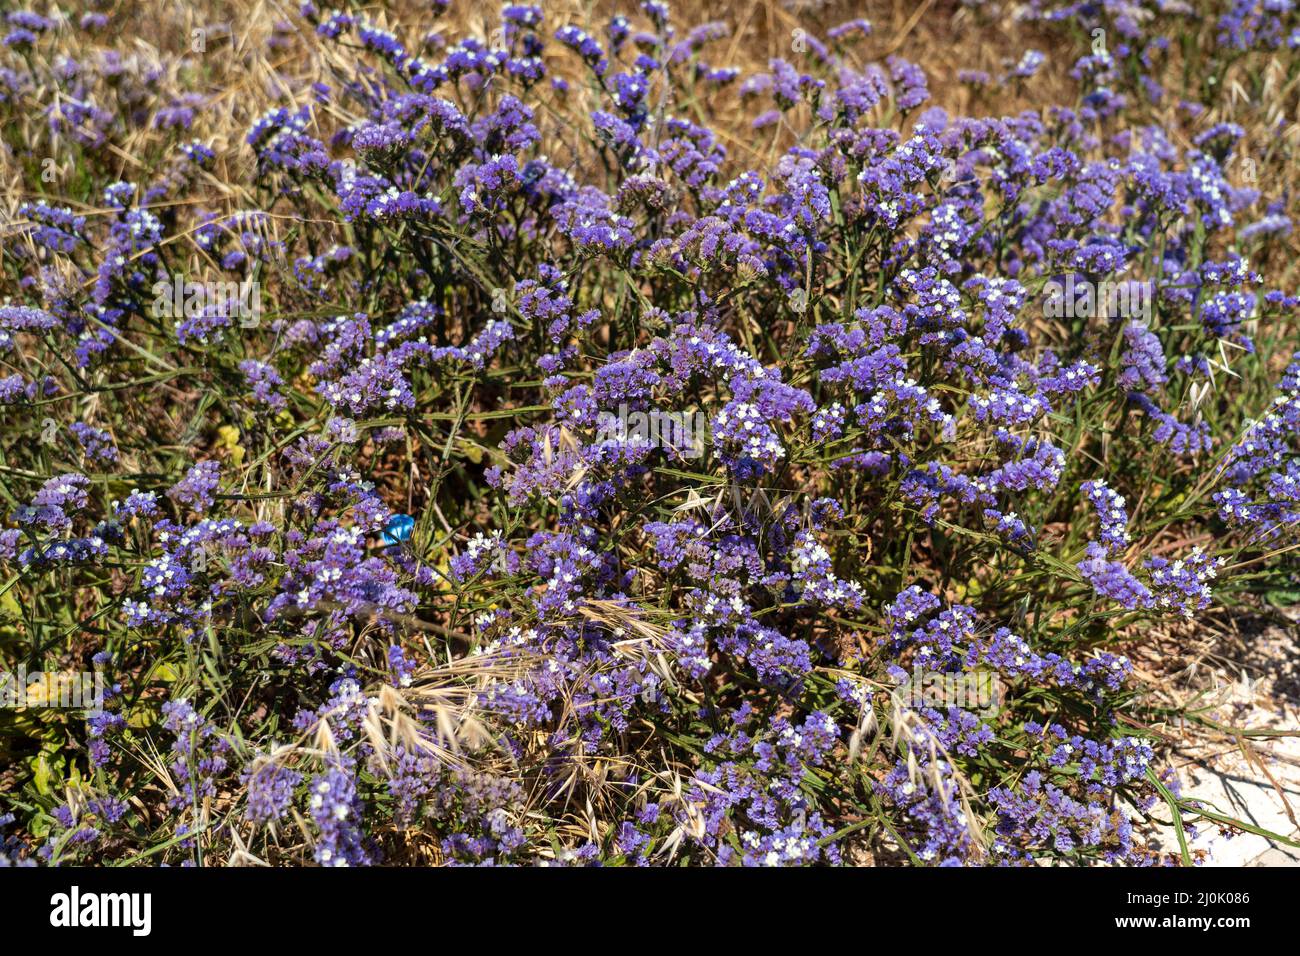 Limonium sinuatum winged mediterranean sea lavender growing wild in Cyprus seashore. Wonderful coastline in Paphos, Cyprus with Stock Photo